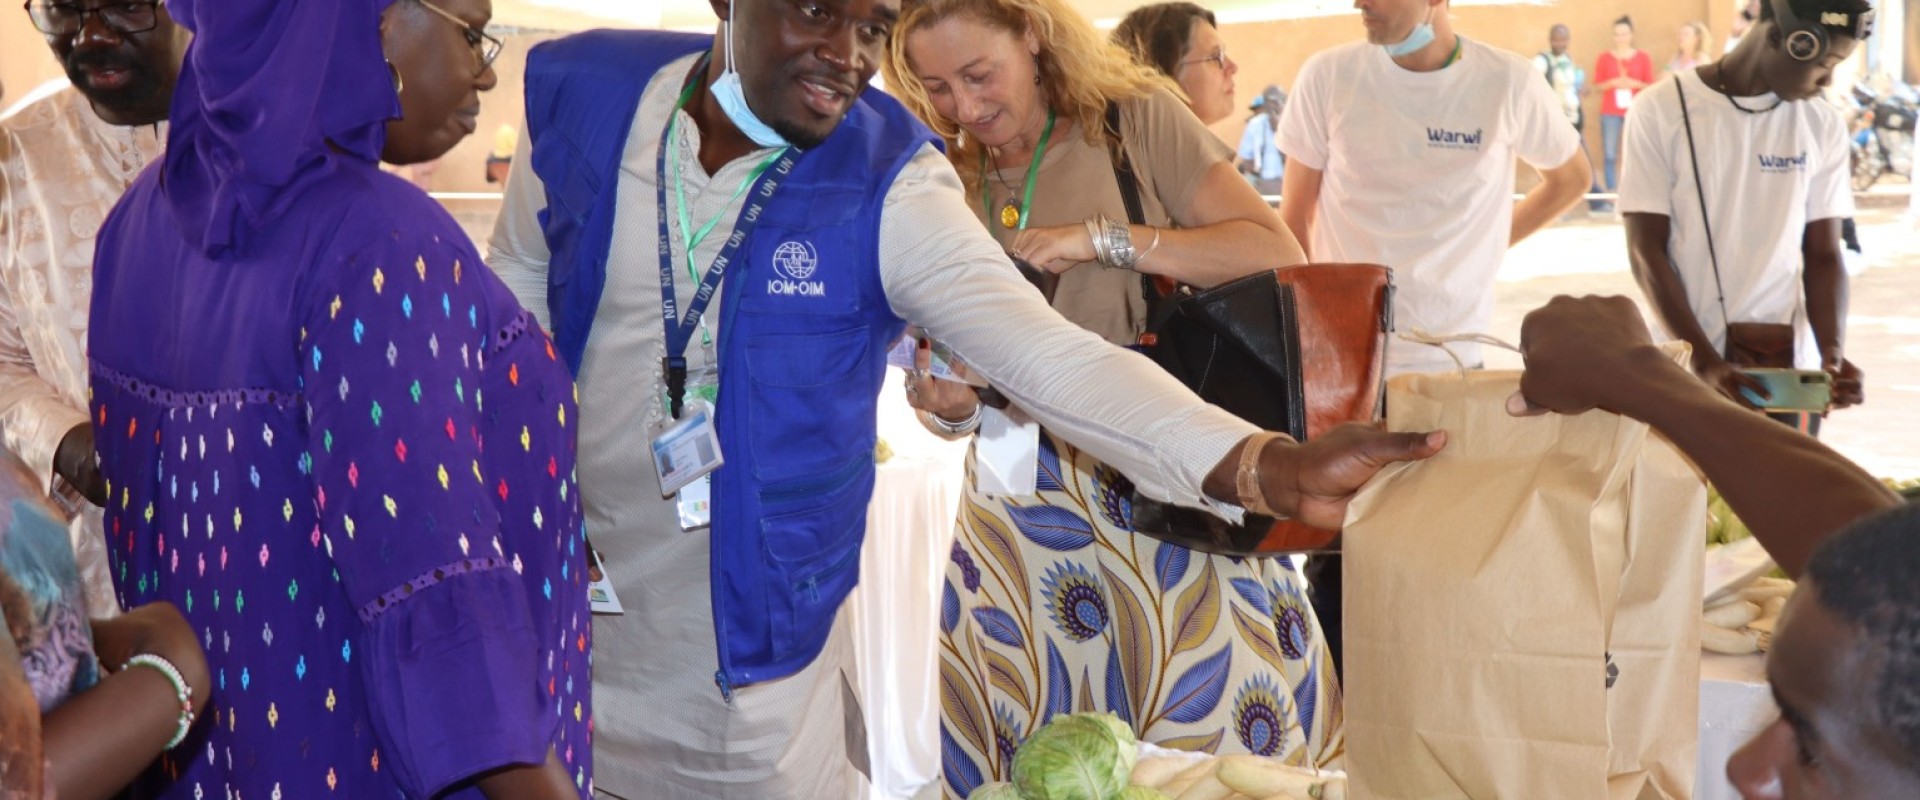 Visiting booths at the Green Job Fair. Photo credit: IOM Senegal.